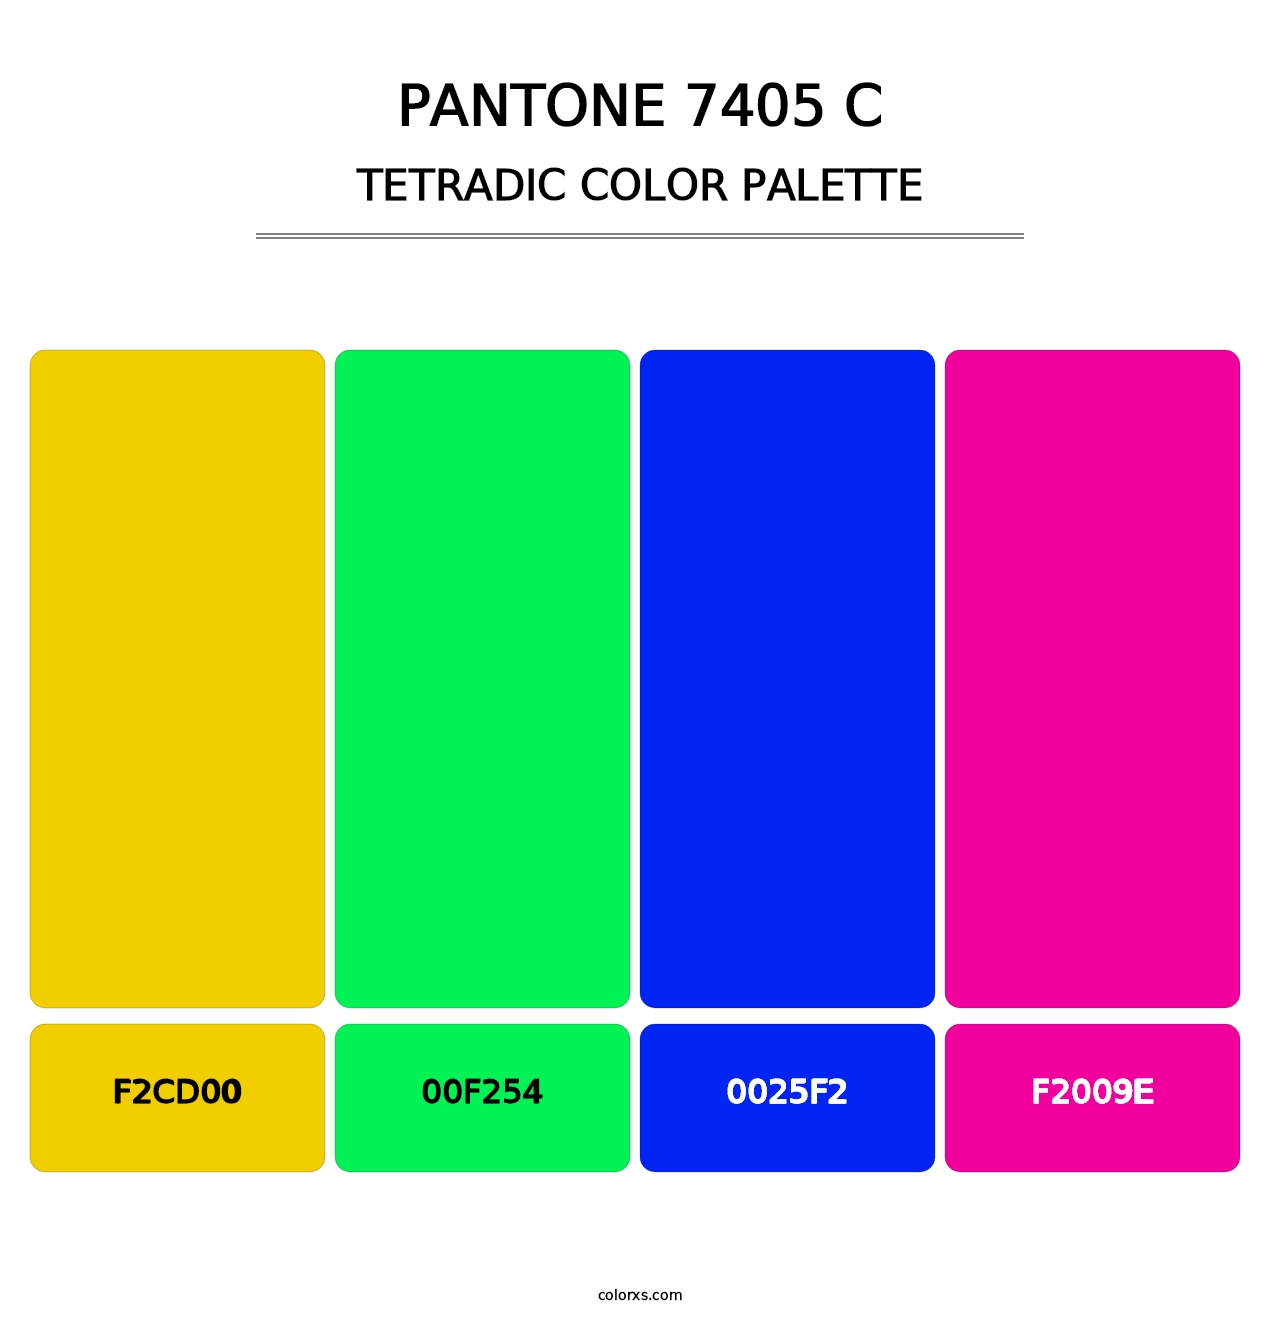 PANTONE 7405 C - Tetradic Color Palette